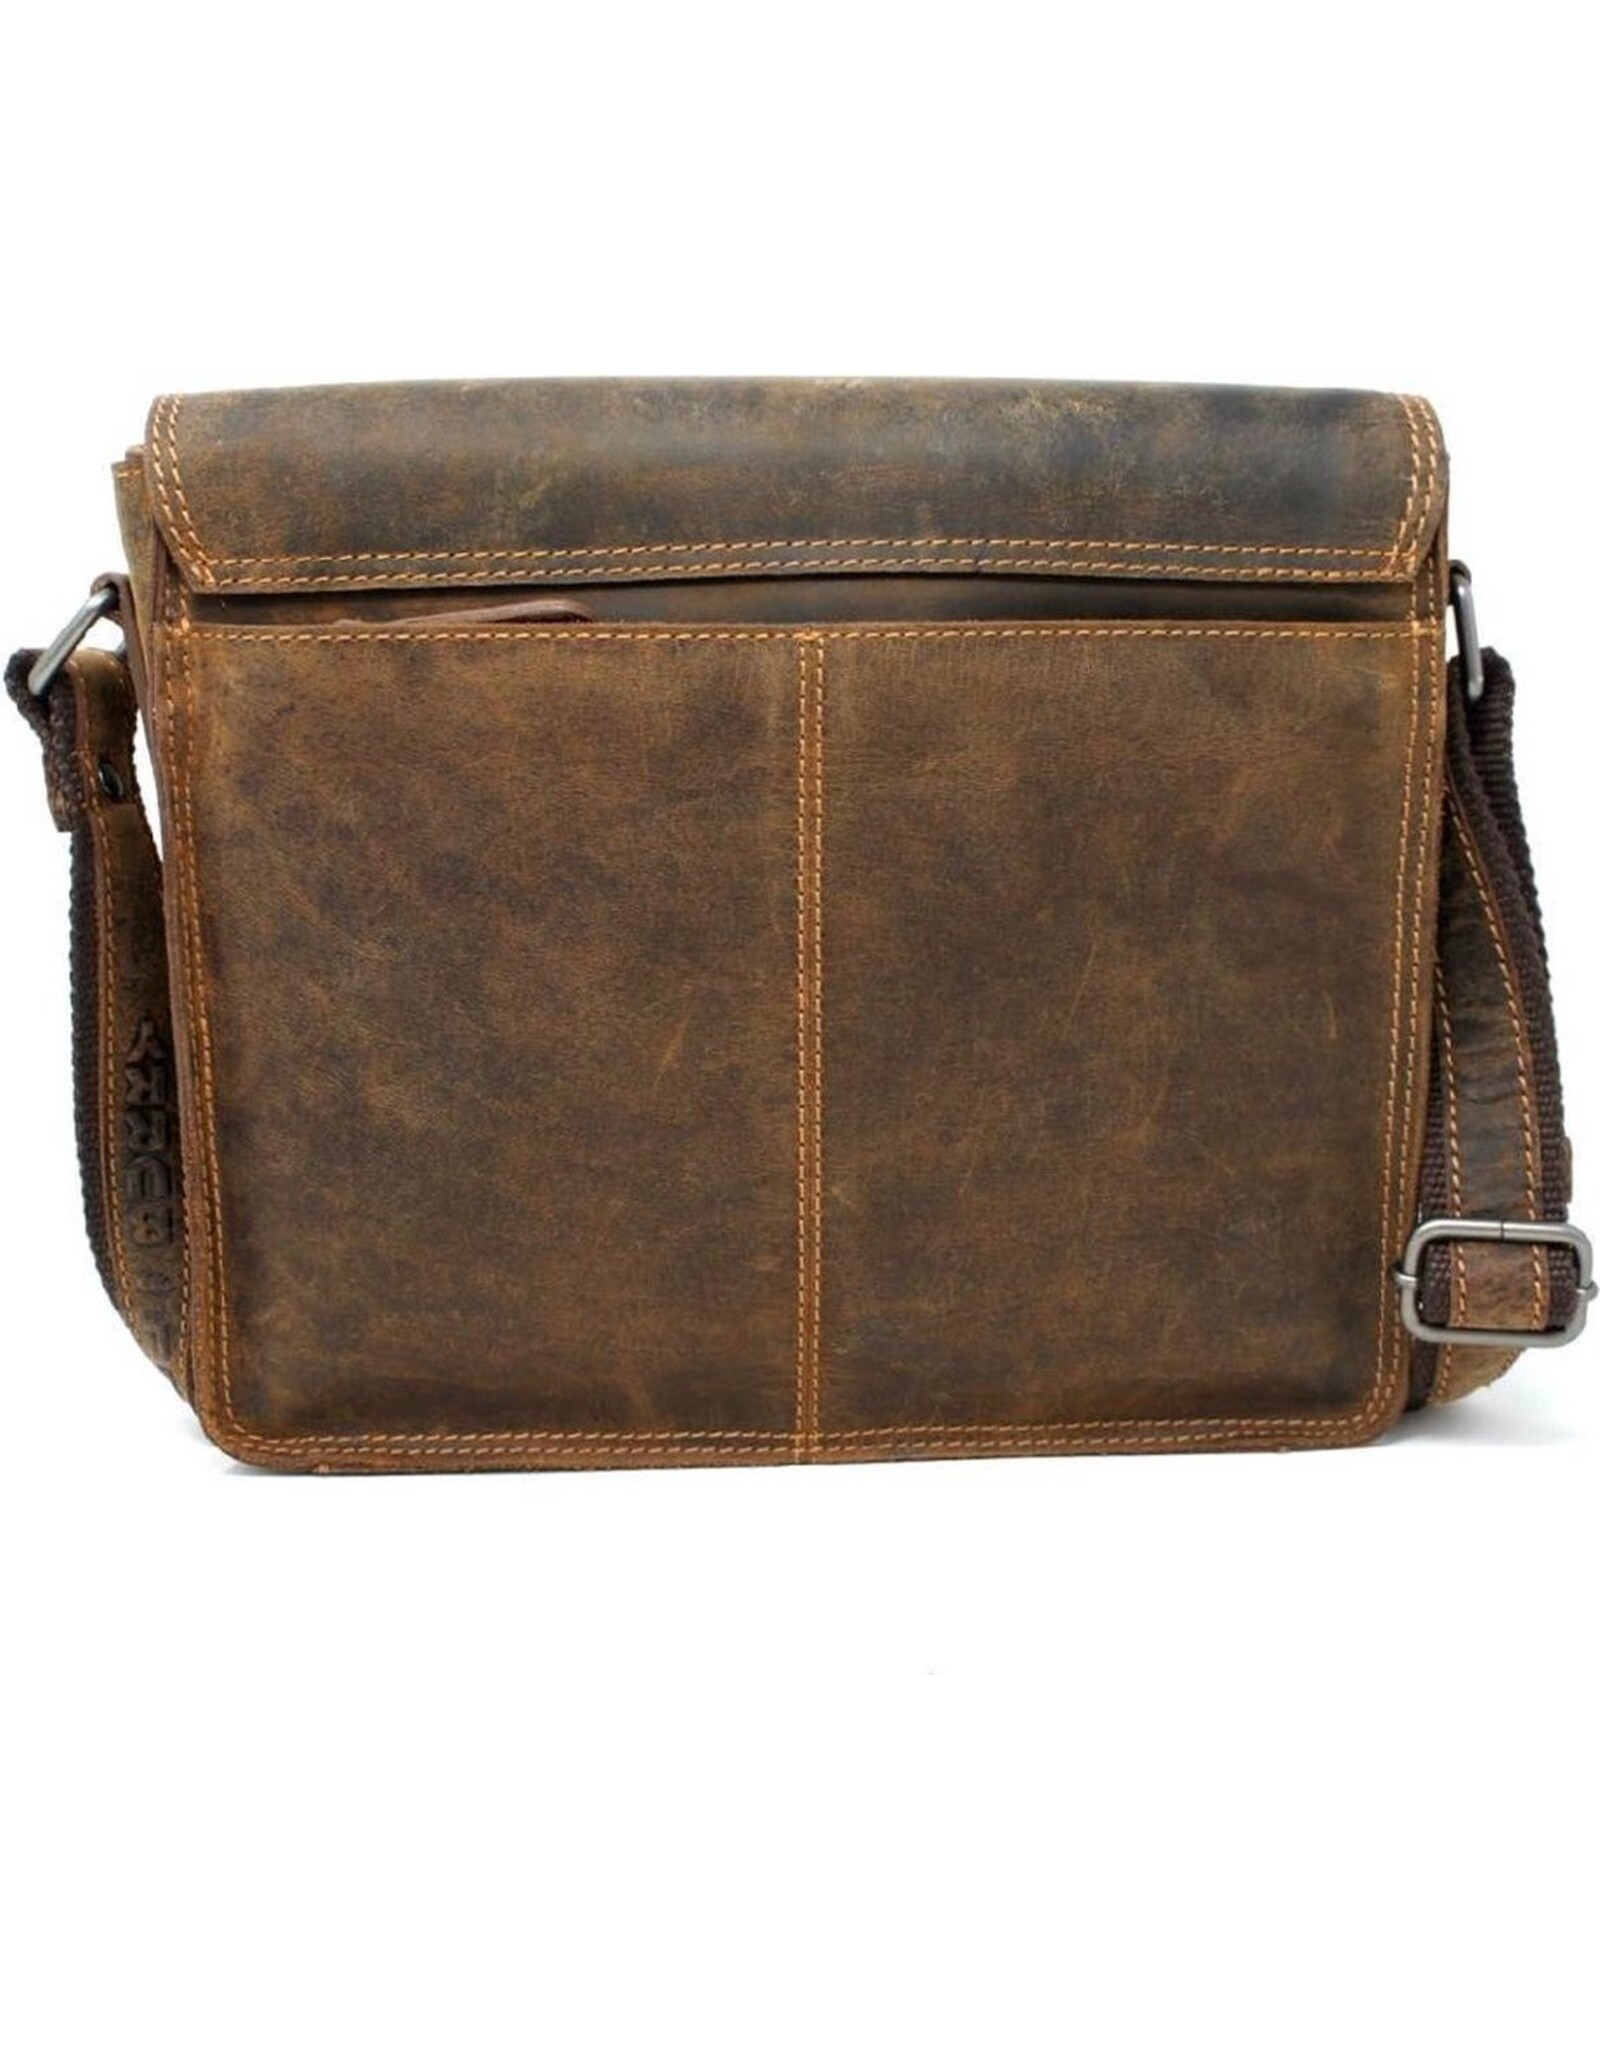 HillBurry Leather laptop bags - HillBurry Leather school bag vintage look (large)